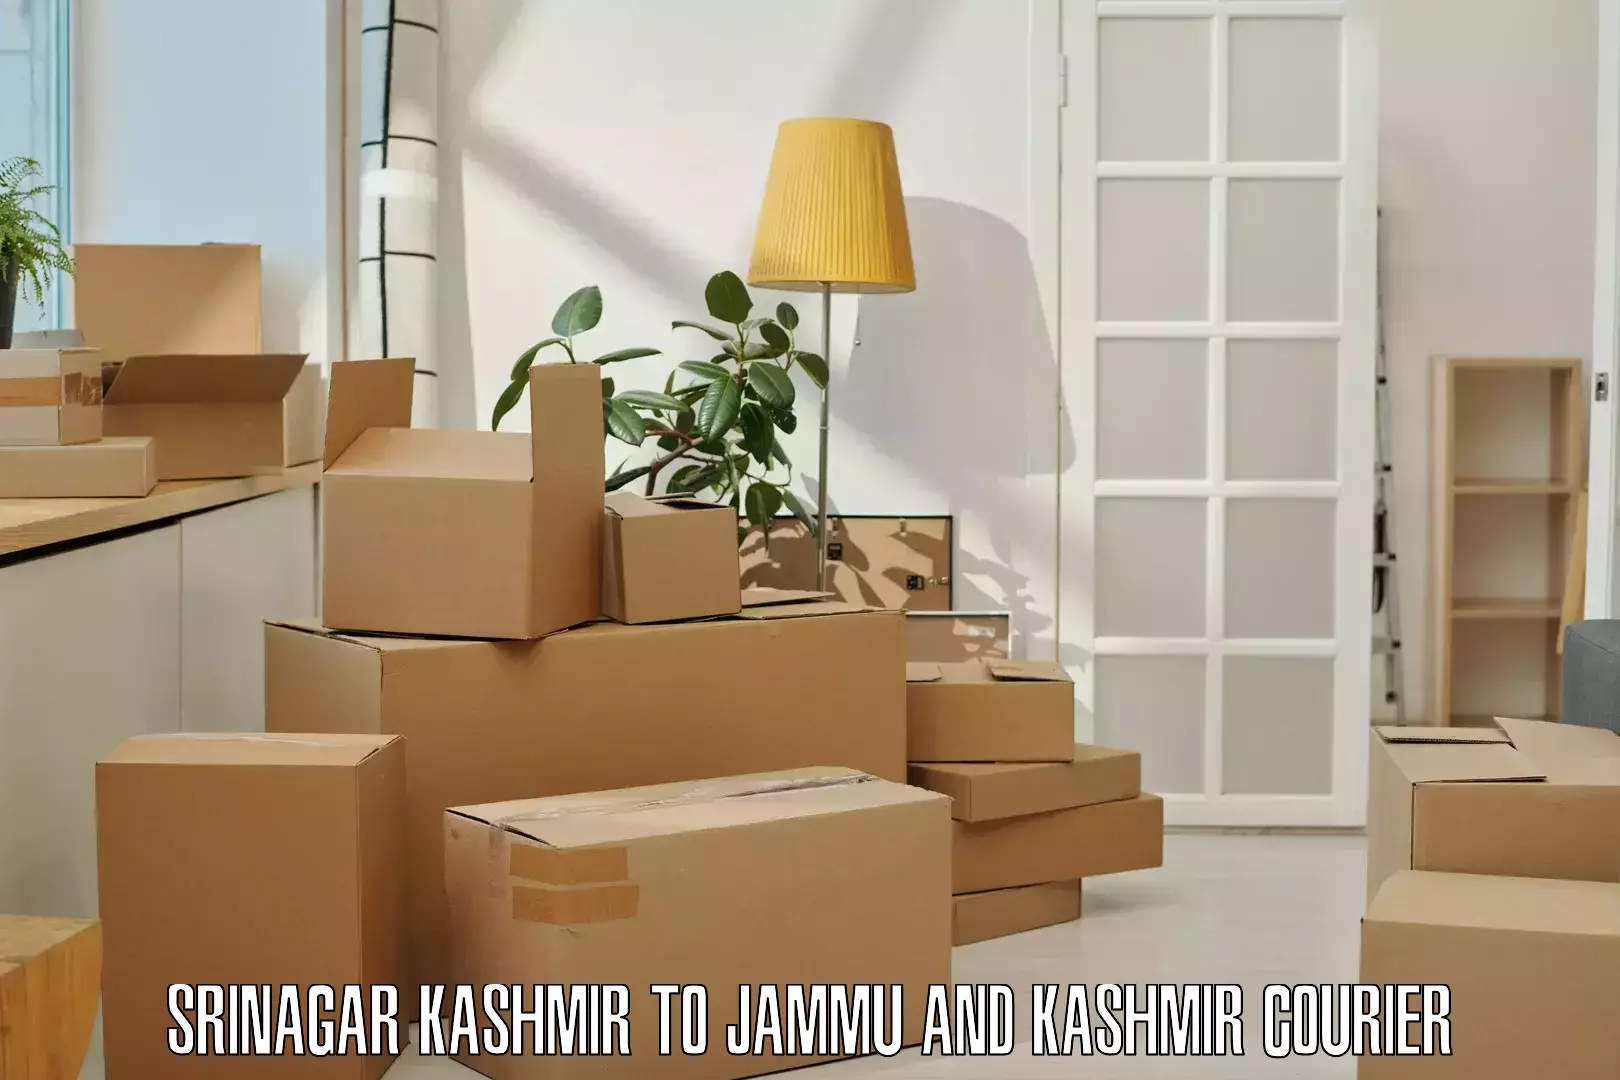 Global logistics network Srinagar Kashmir to Rajouri